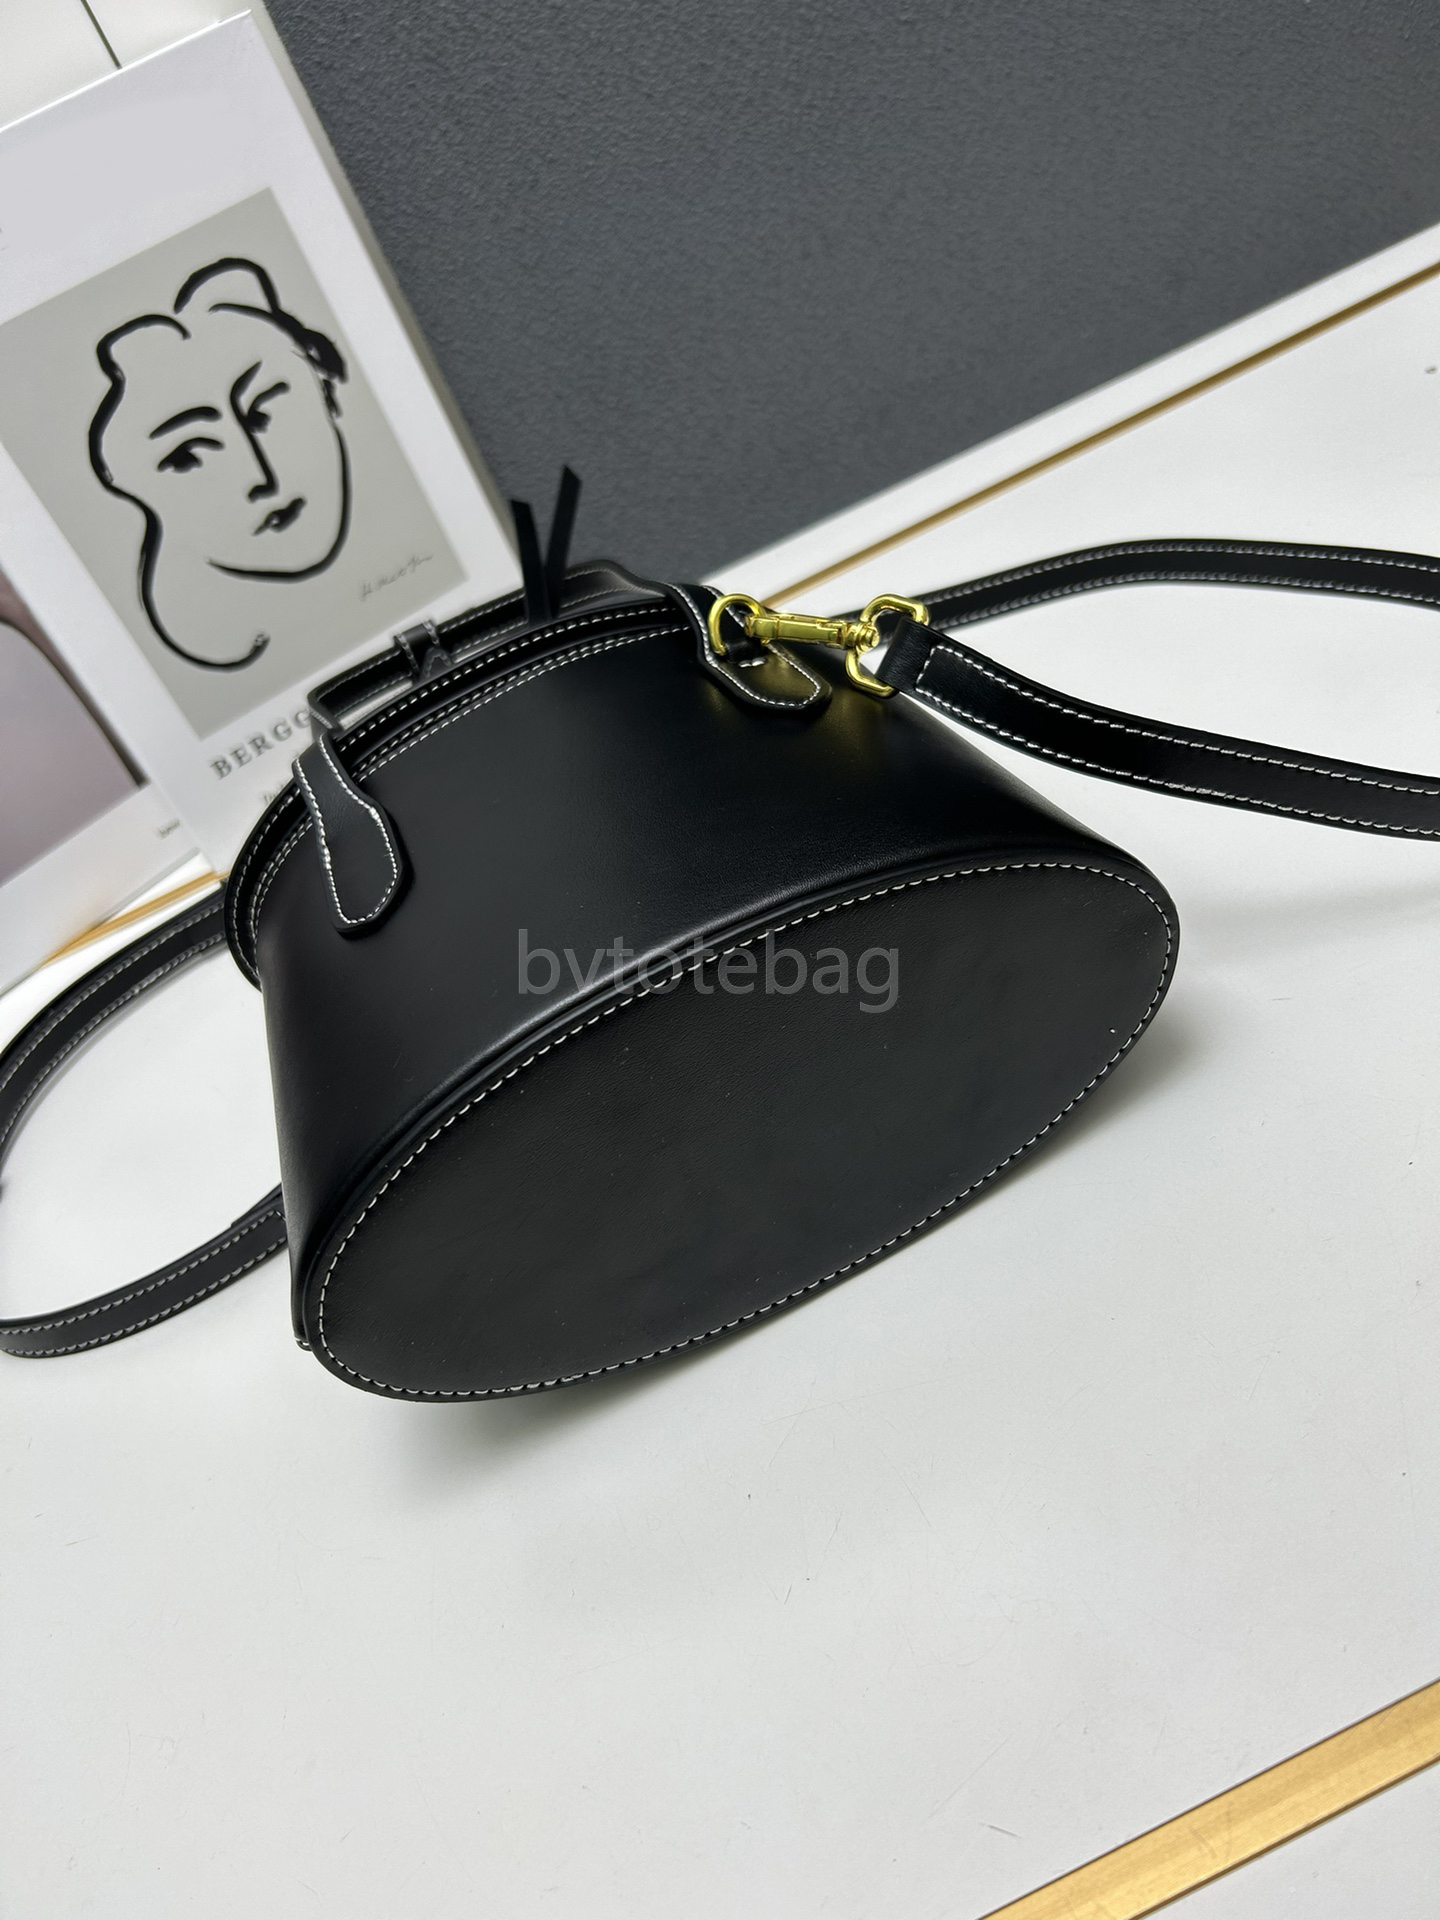 Bolsas muii diseñador bolso de cubo bolsas blancas negras bolso bolso mini bolsas de hombro cadena de mujeres bolso de lujo de cuero de cuero bolso bolso 2stilos